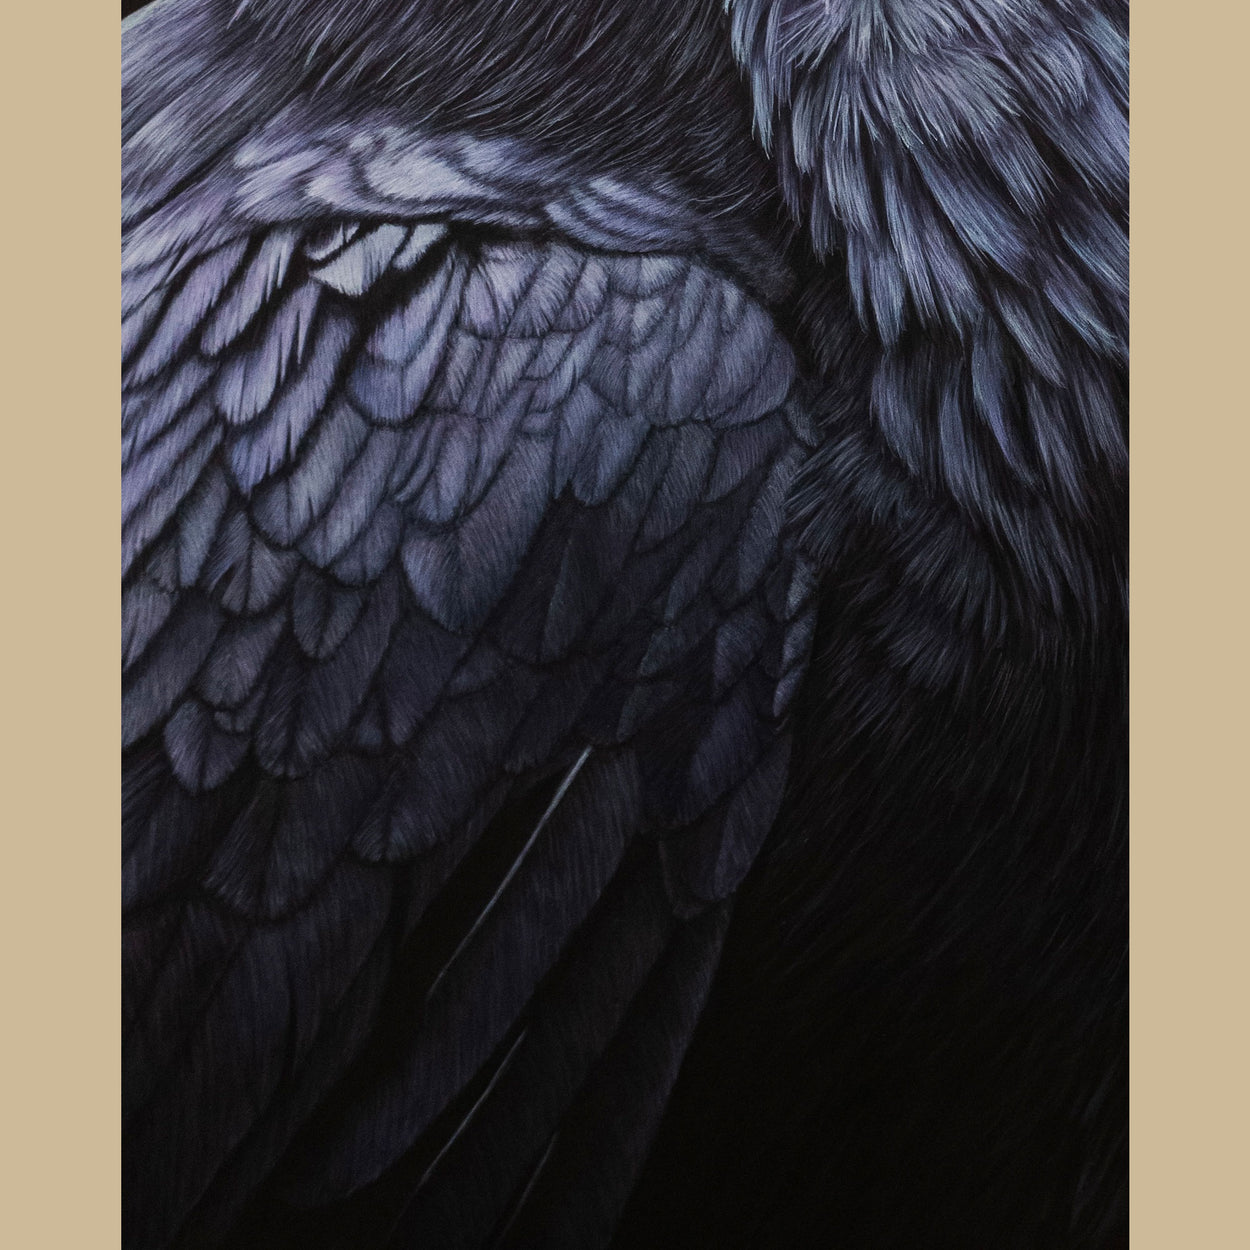 Raven Painting Close-up 2 - Jill Dimond